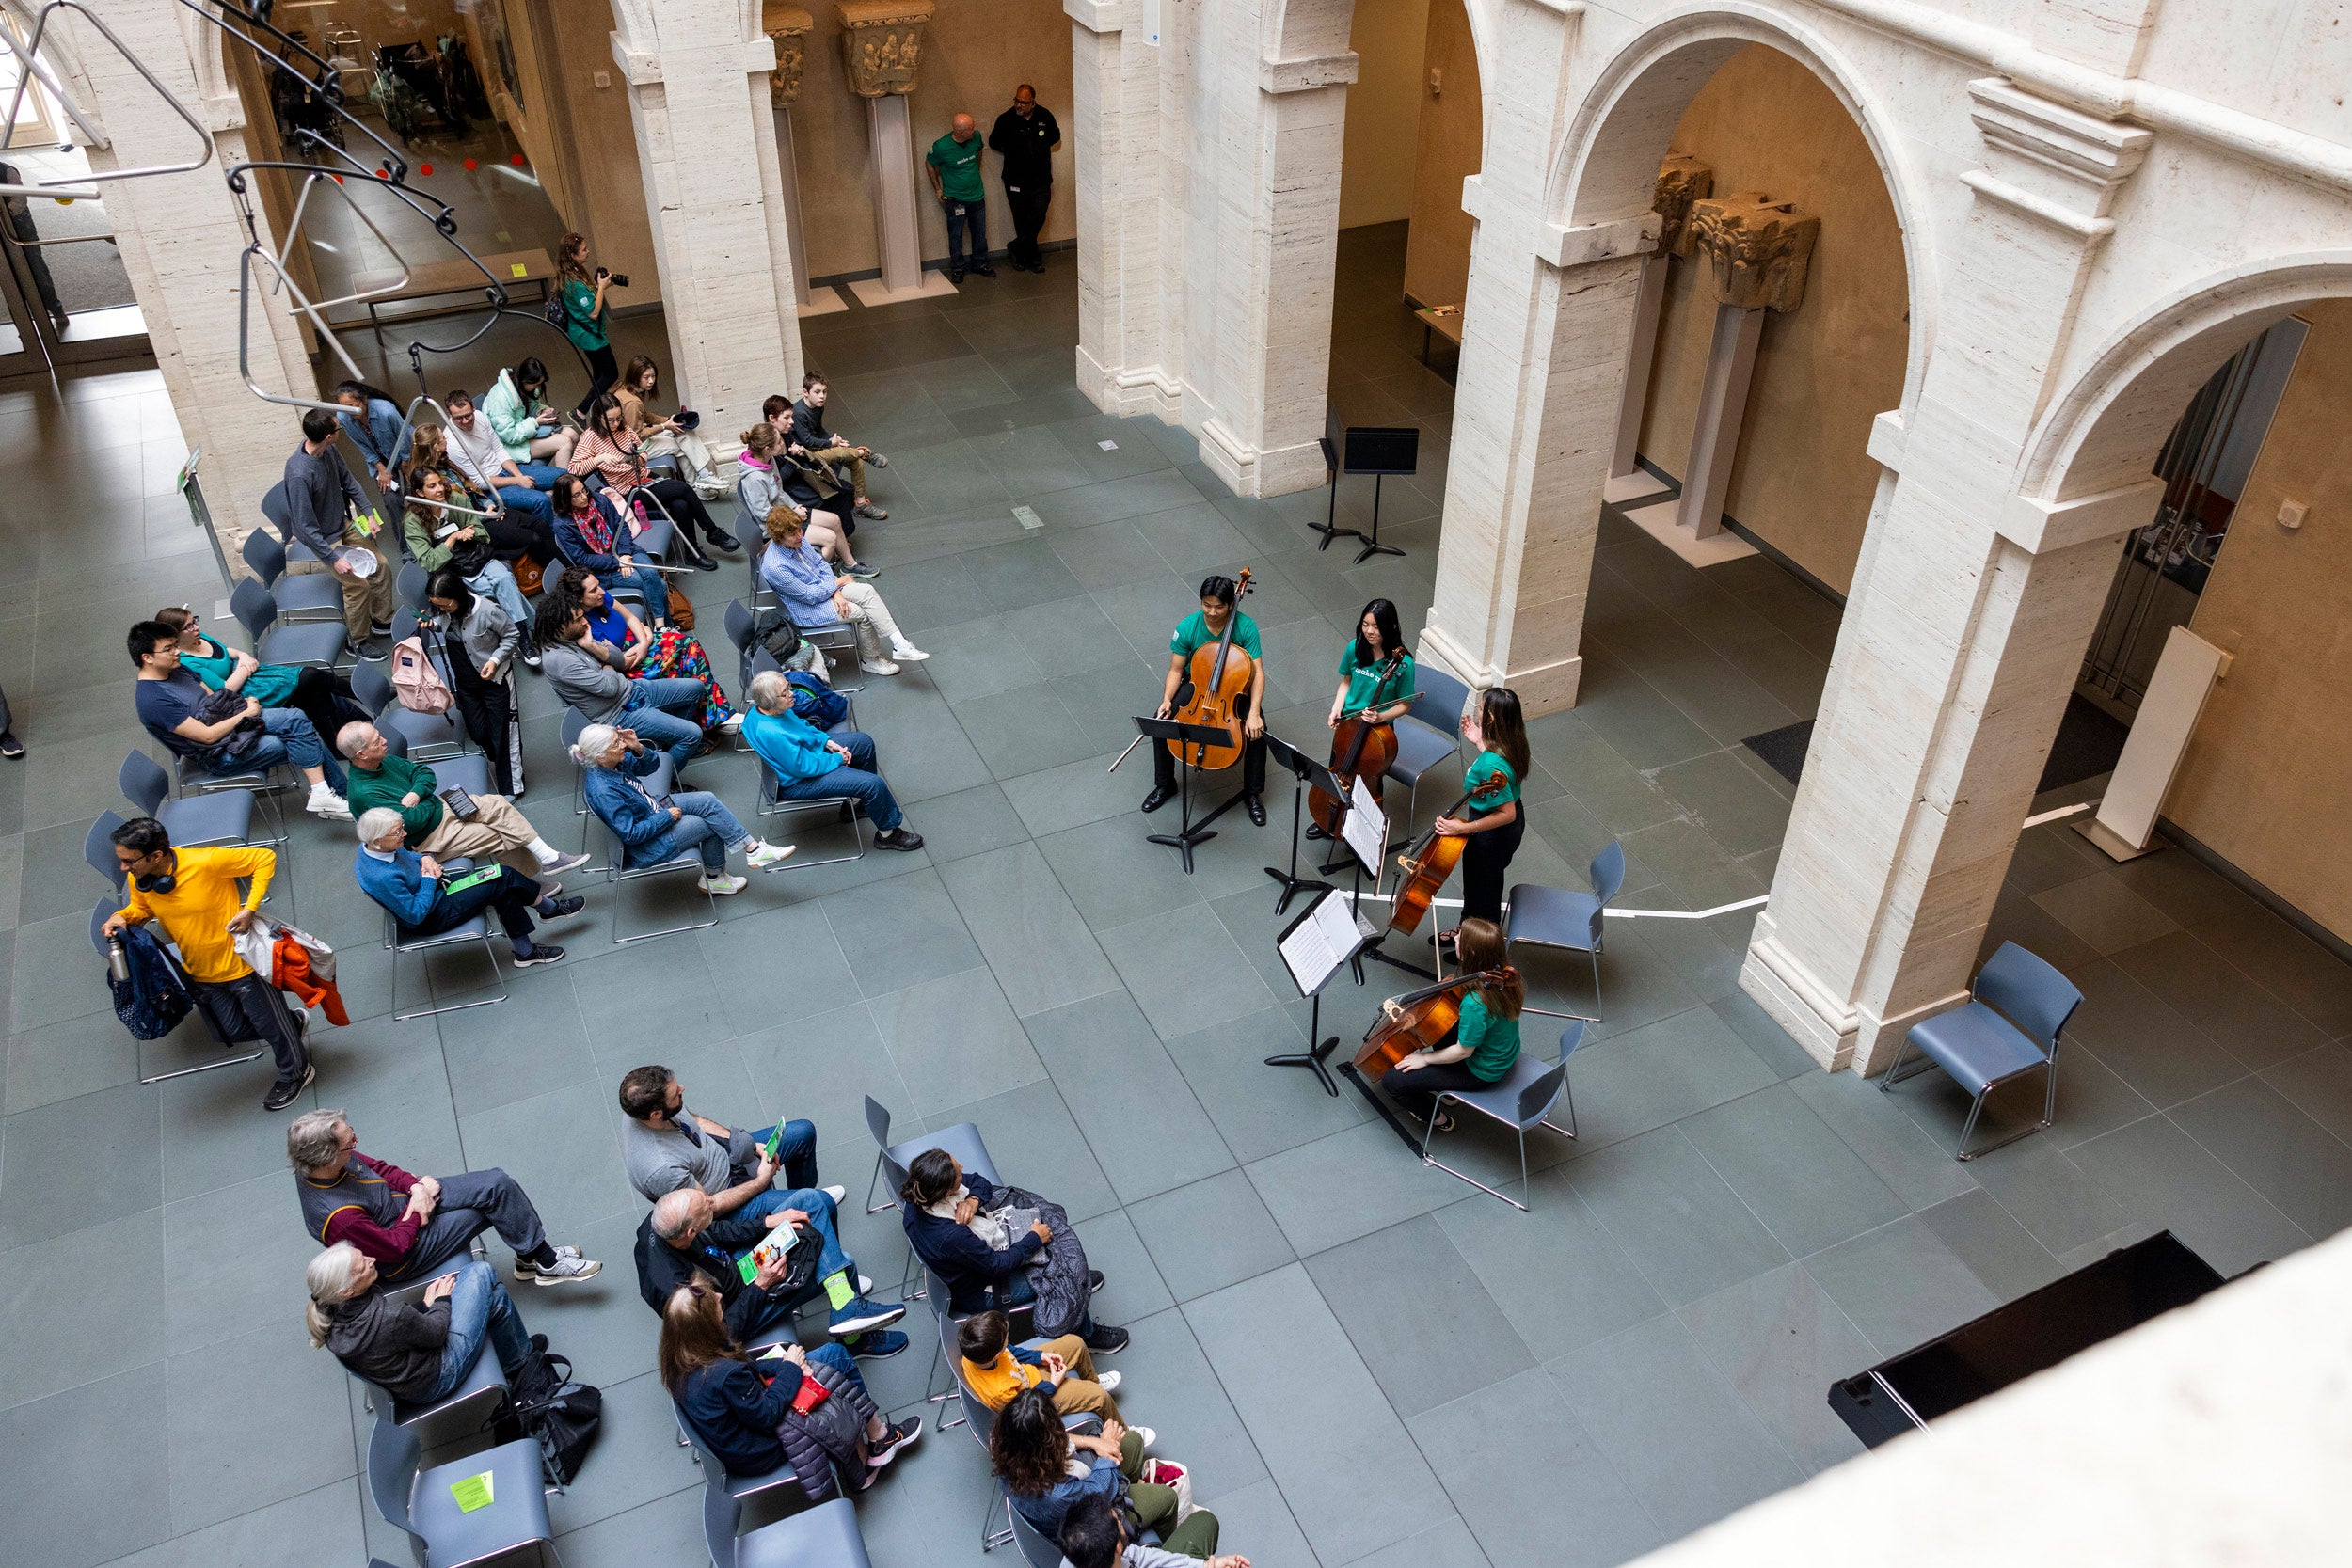 The Crimson Cellos perform a Disney medley in the Harvard Art Museums’ Calderwood Courtyard.